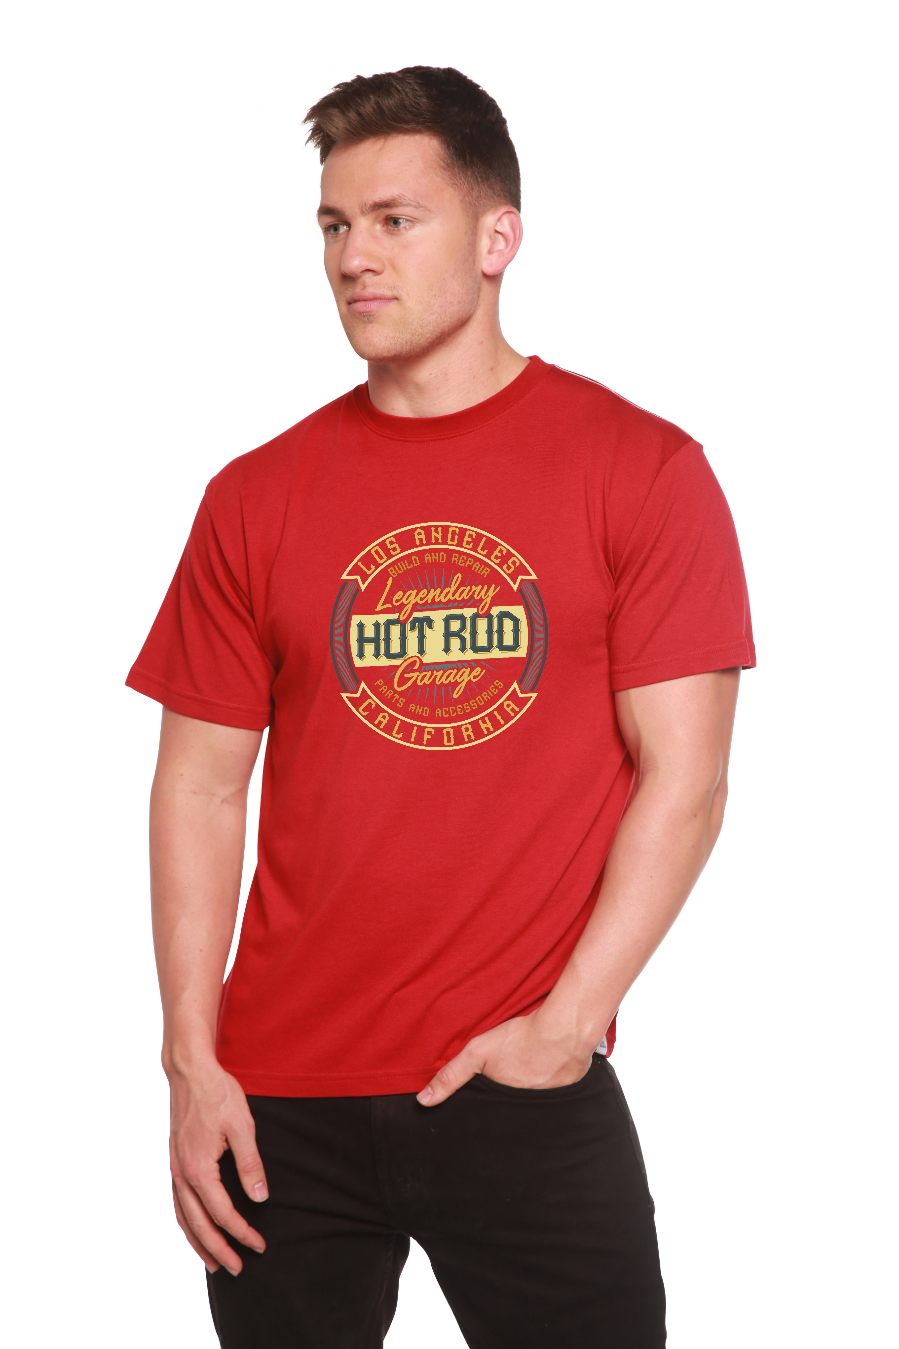 HOT ROO Men's Bamboo Viscose/Organic Cotton Short Sleeve T-Shirt - Spun Bamboo